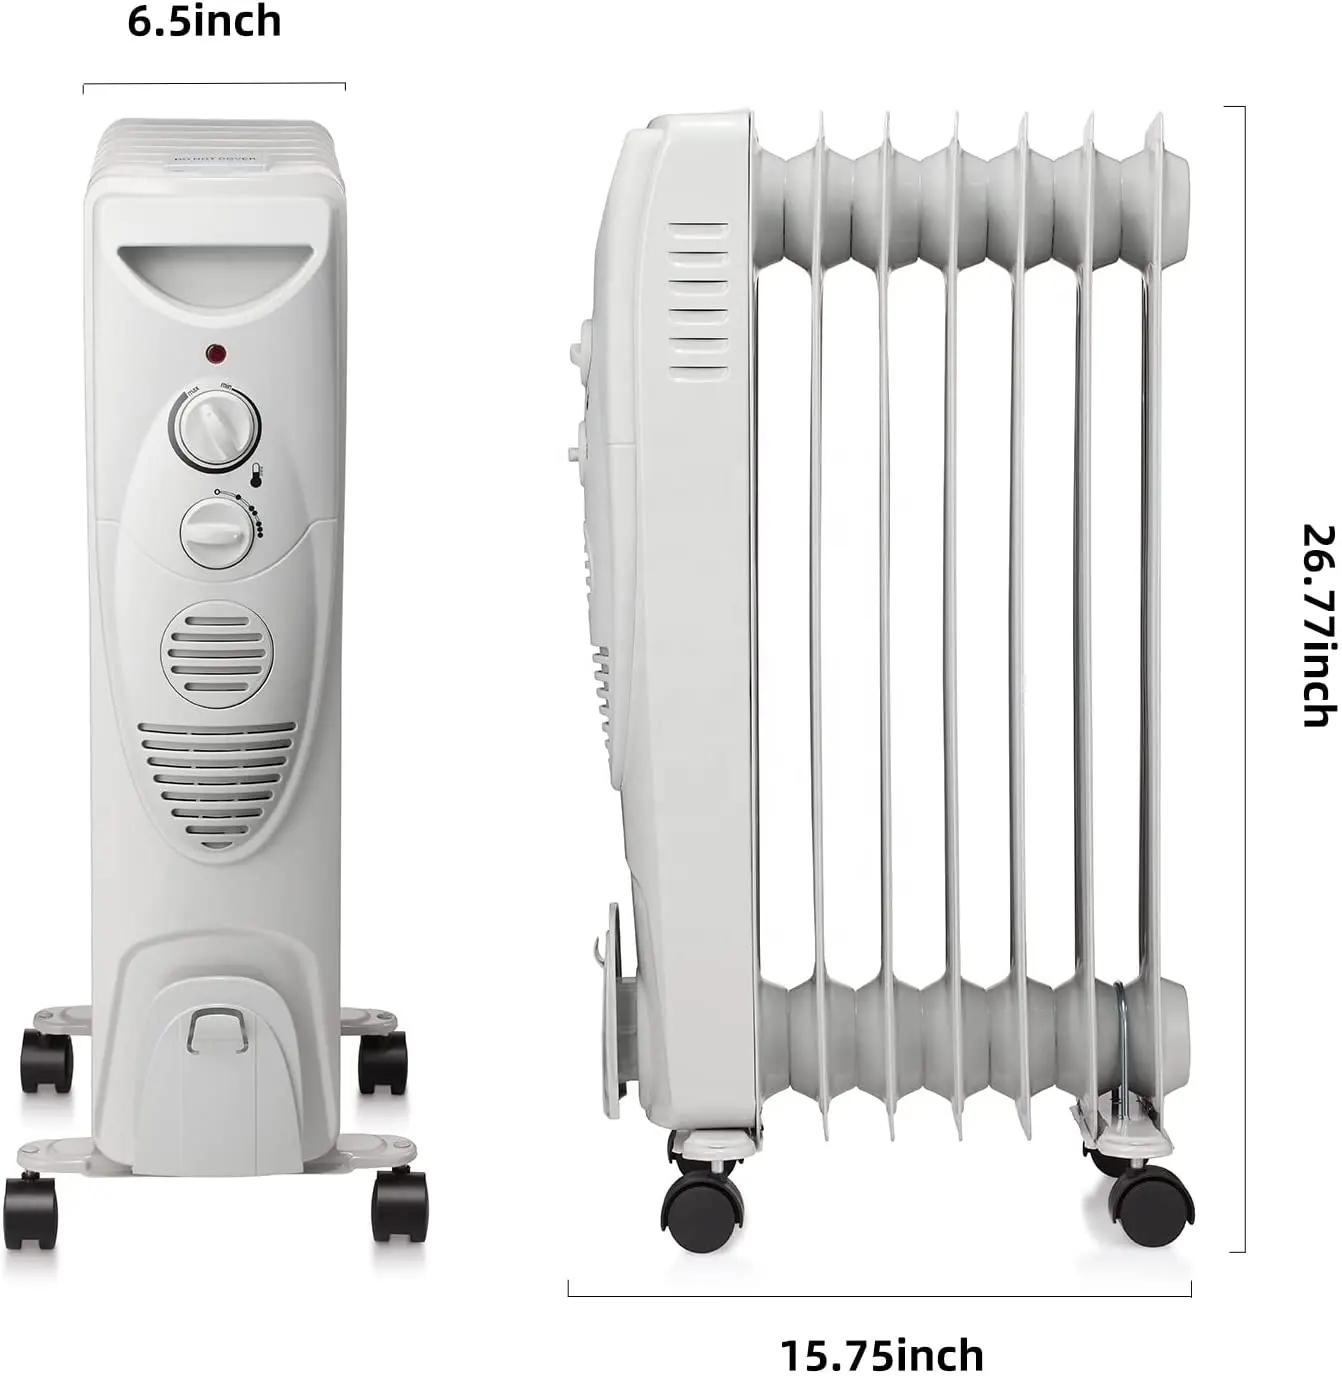 Olie Gevulde Radiator Heater 3 Warmte Settingsadjustable Thermostatportable Ruimte Heaterquiet Heater Met Tip-Over En Oververhitting